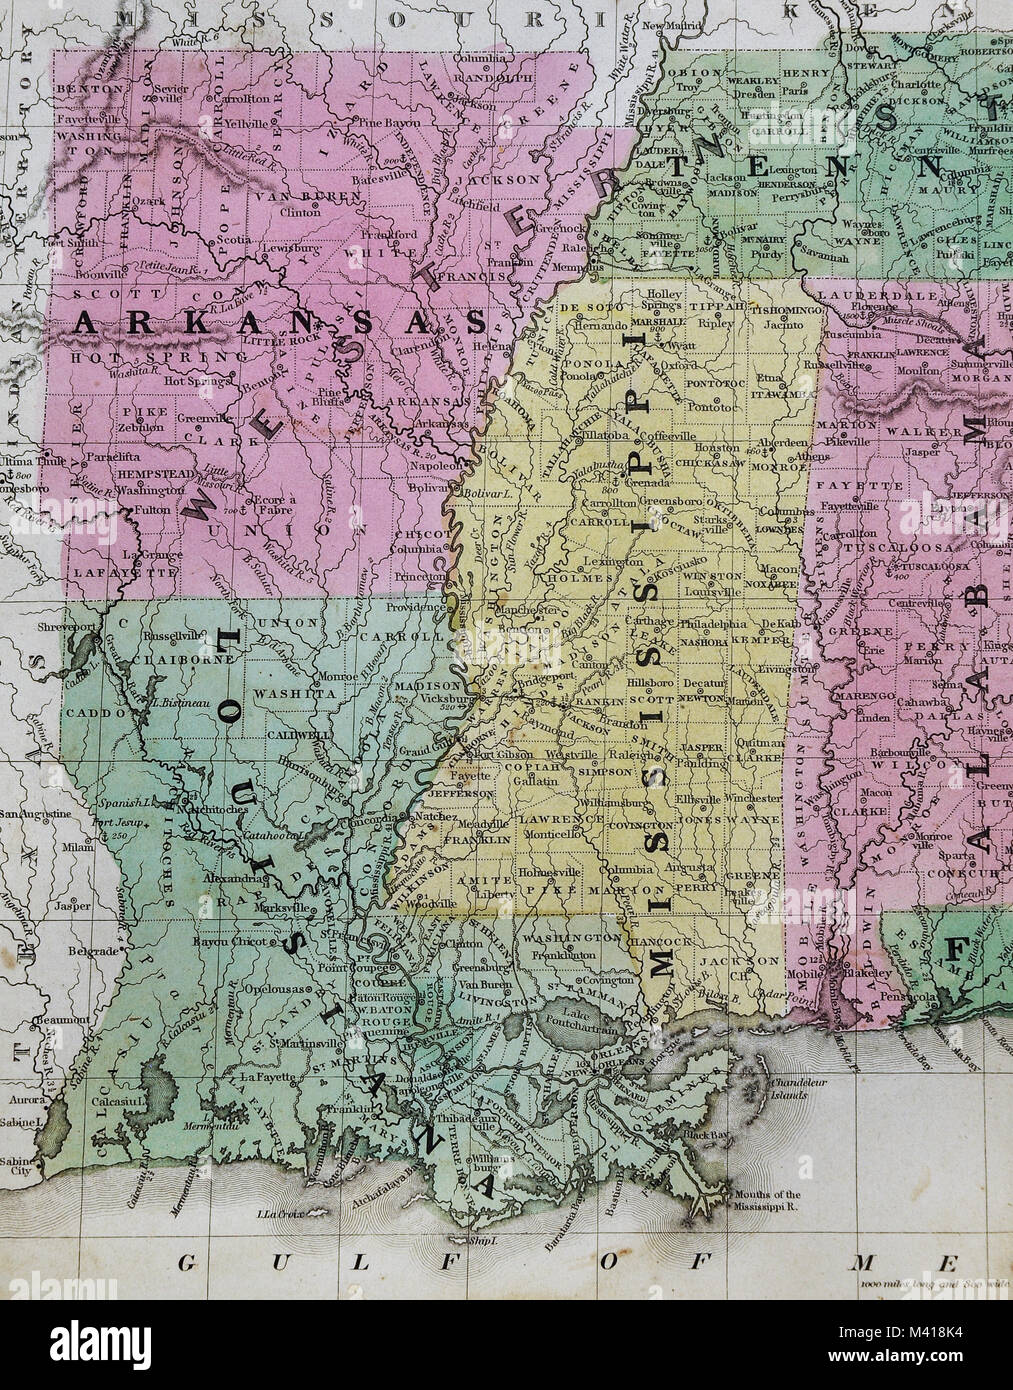 1839 Mitchell Map - United States South - Southern States Louisiana Mississippi Arkansas Alabama Tennessee Stock Photo